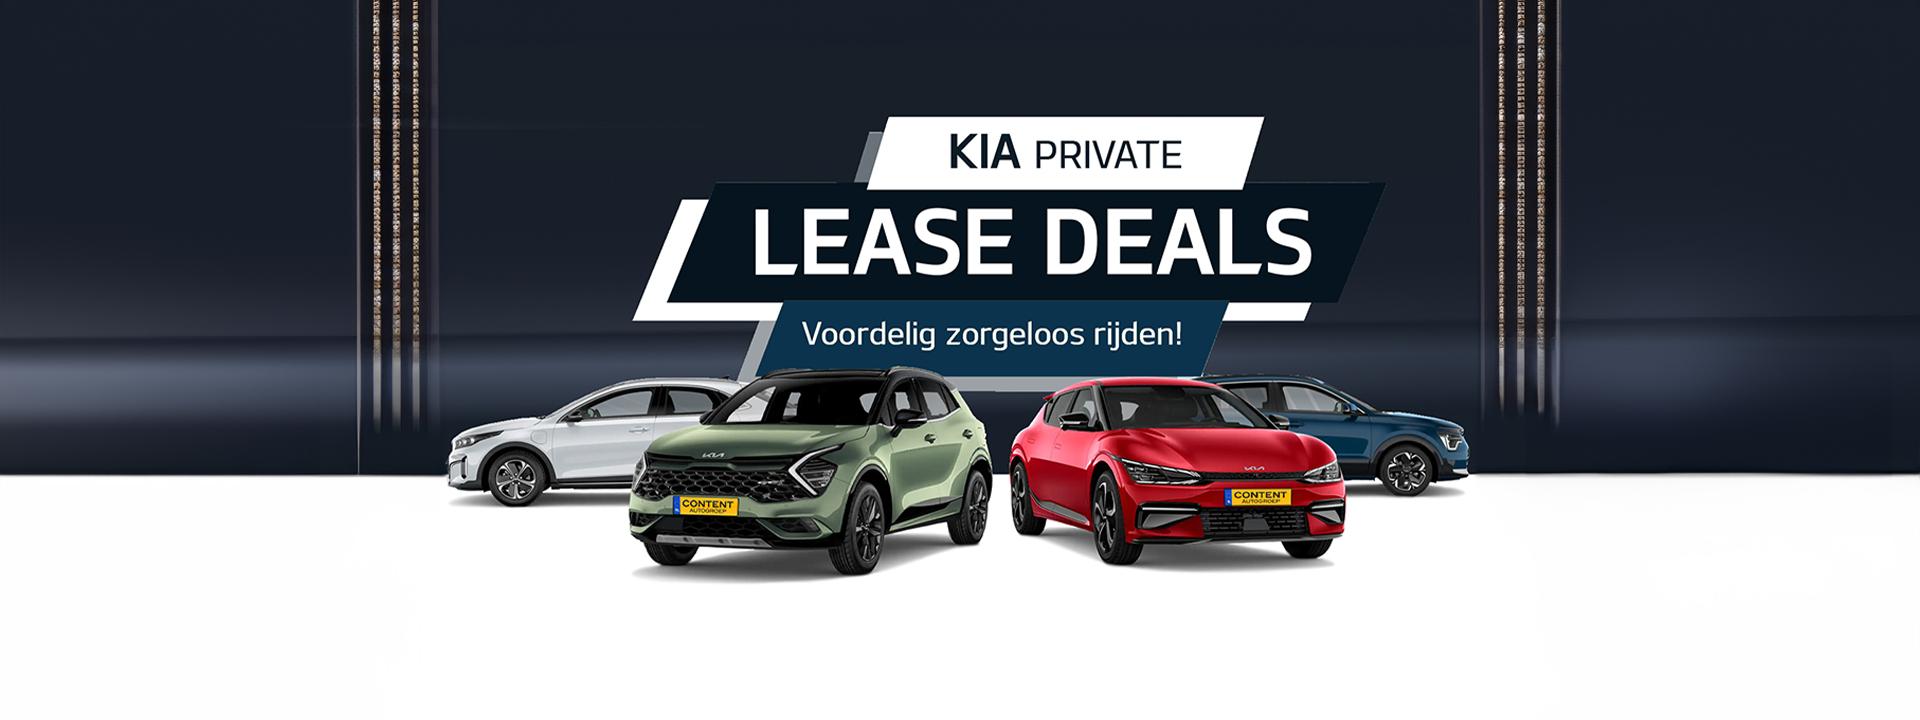 Kia Lease Deals